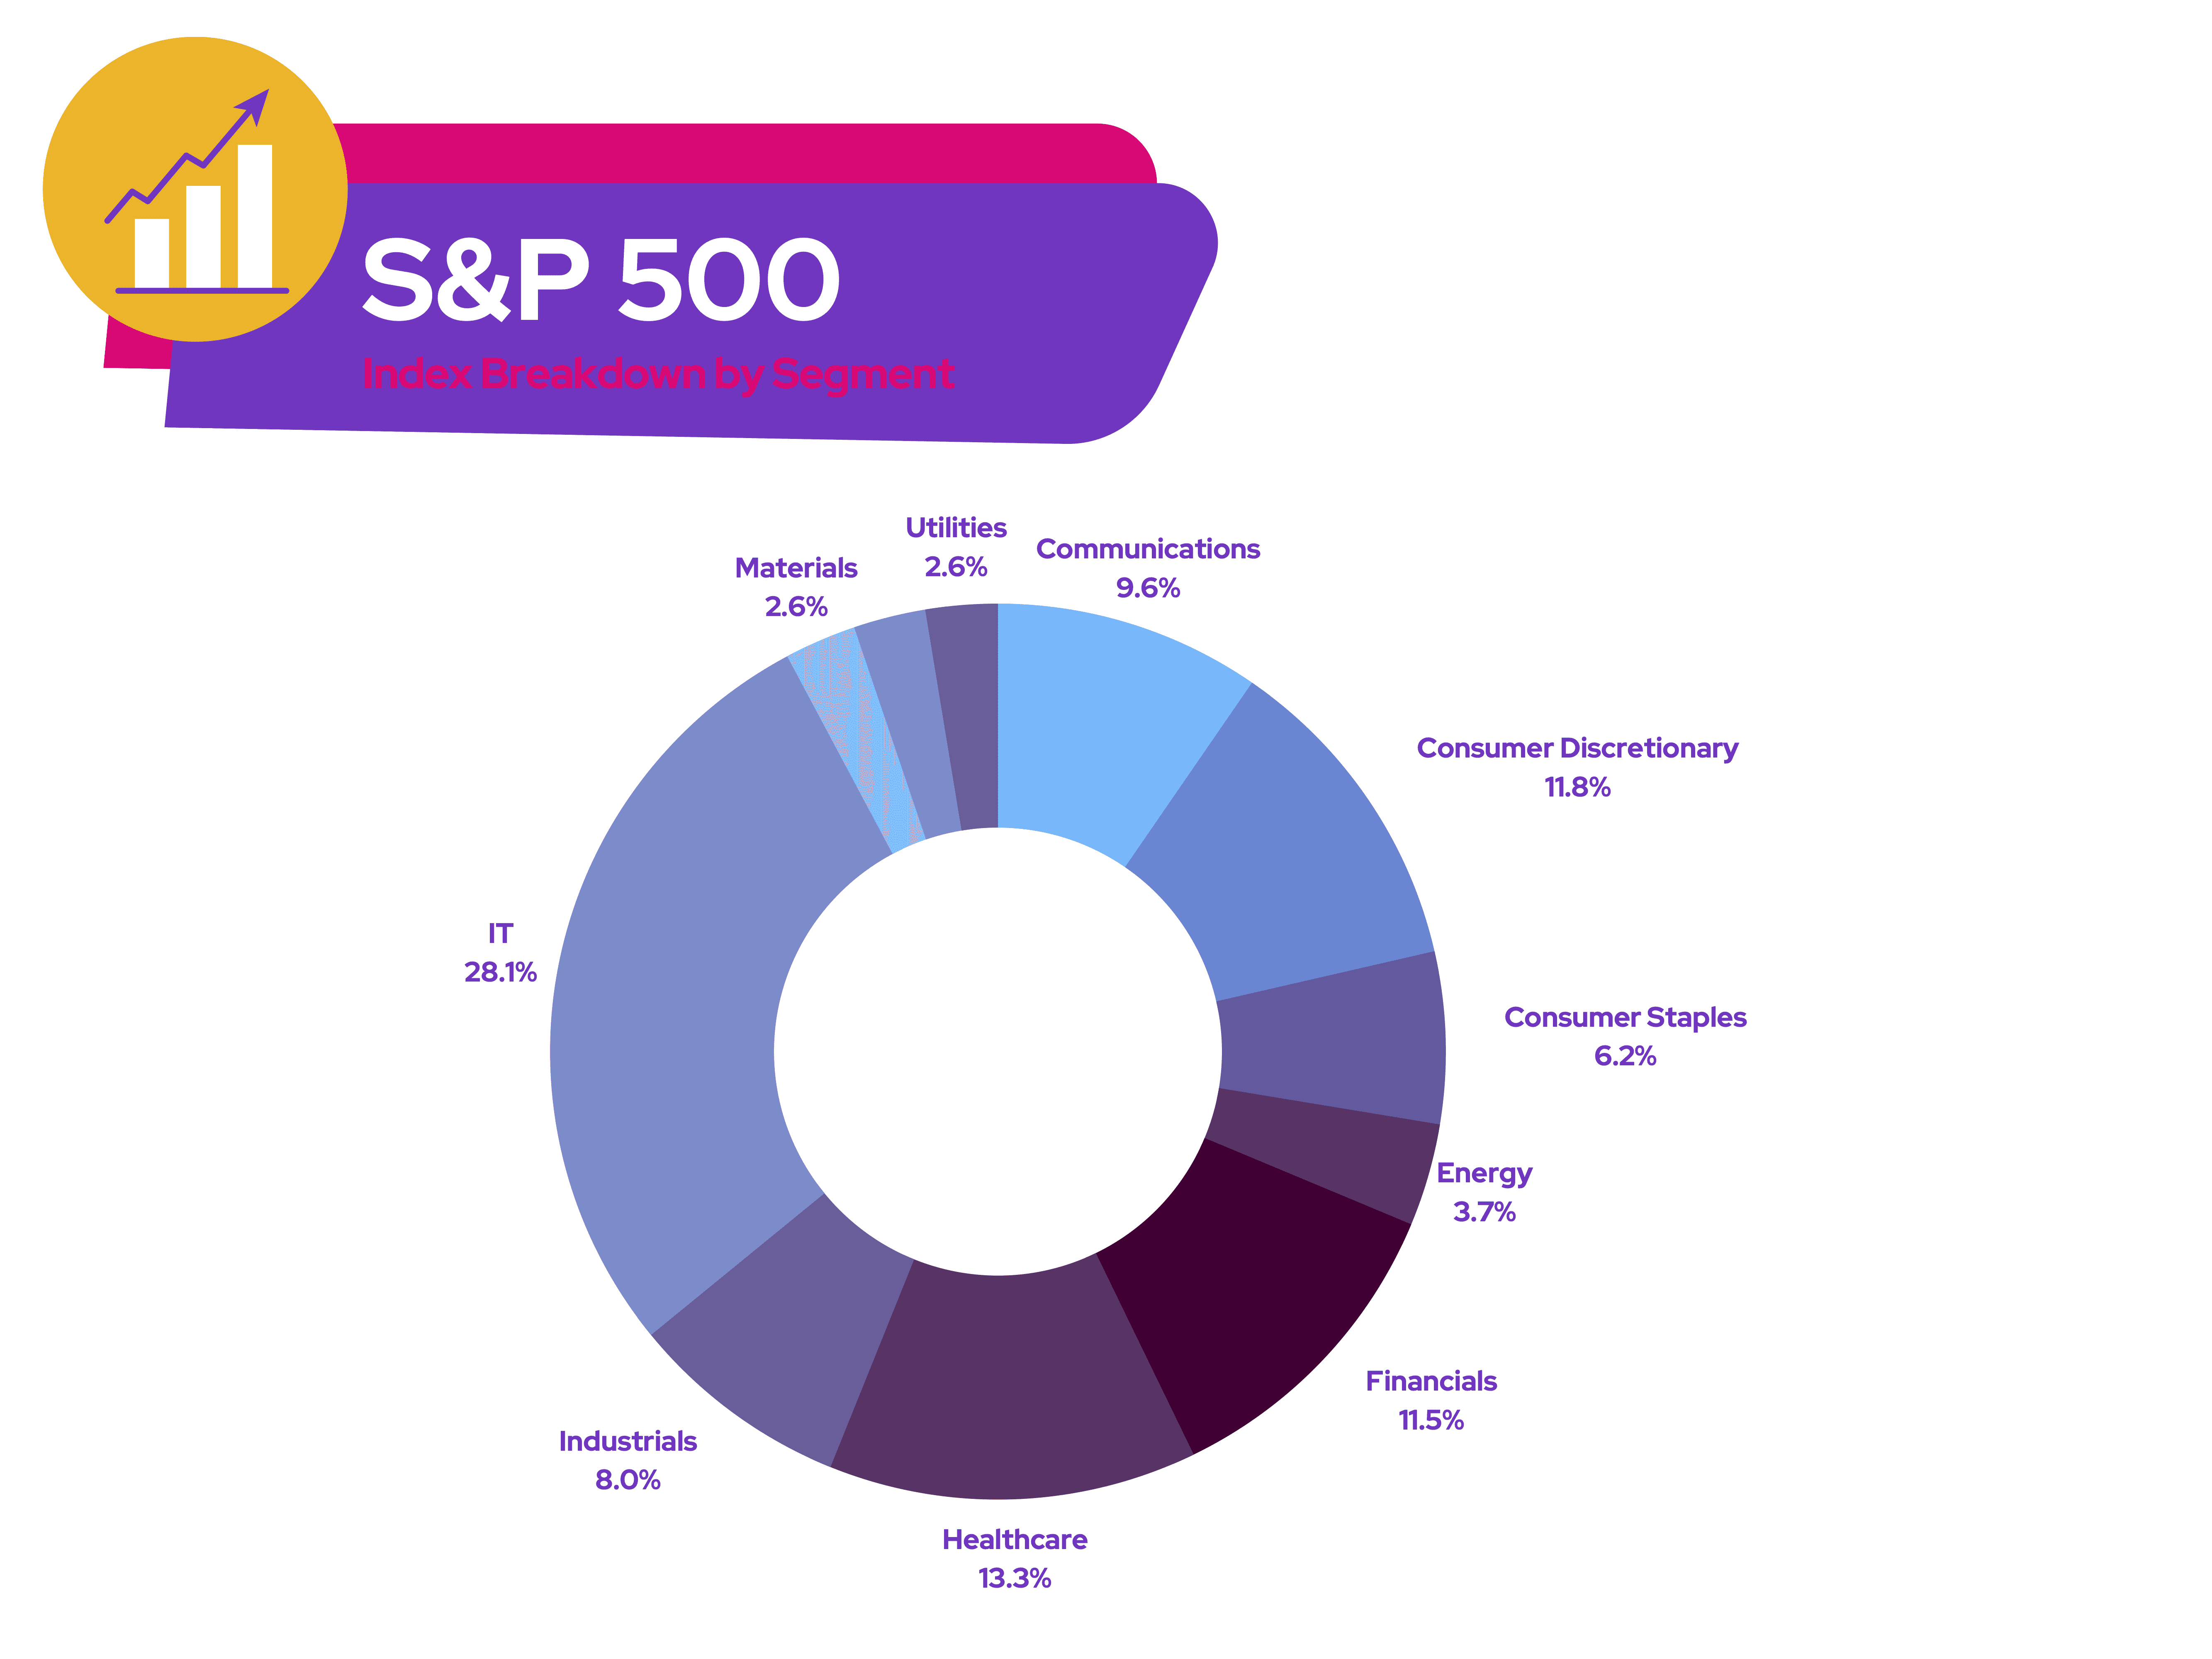 S&P 500 - Index Breakdown by Segment